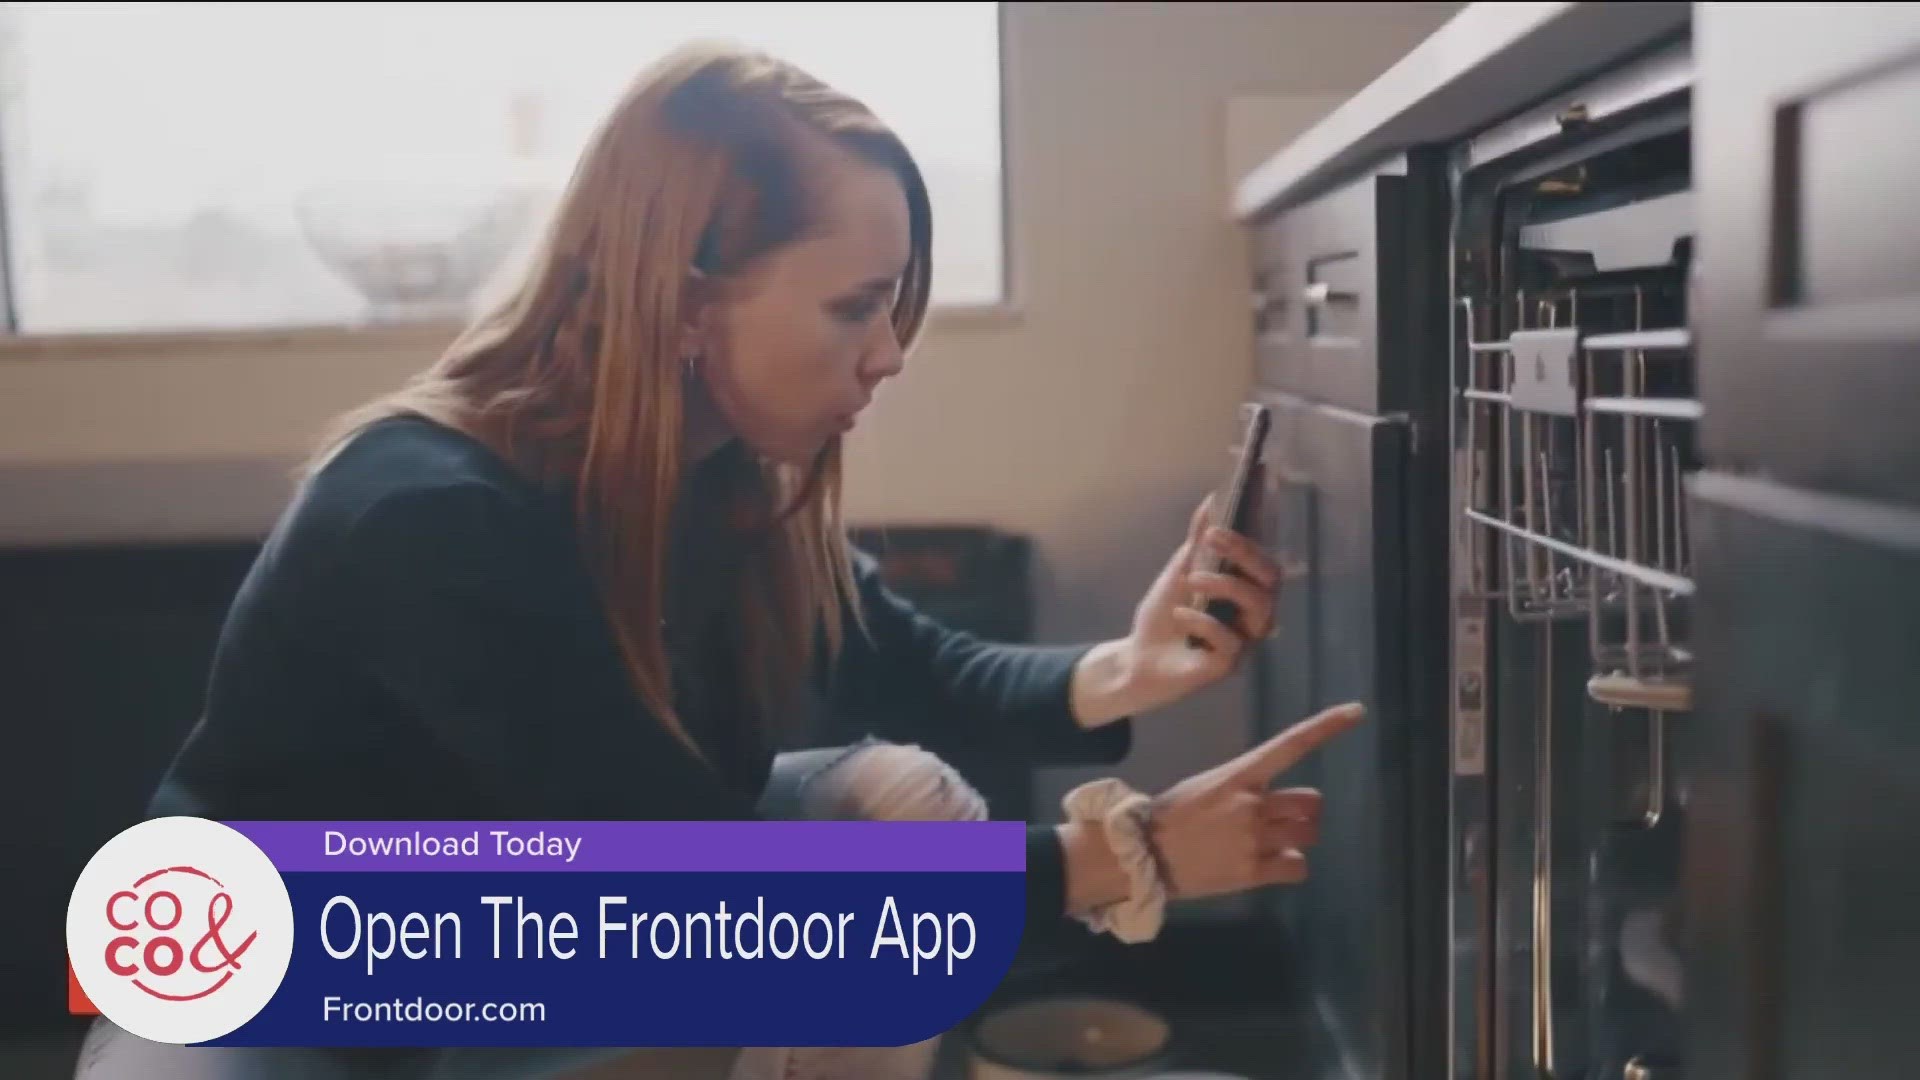 Download the Frontdoor app to get expert help right in your own home.